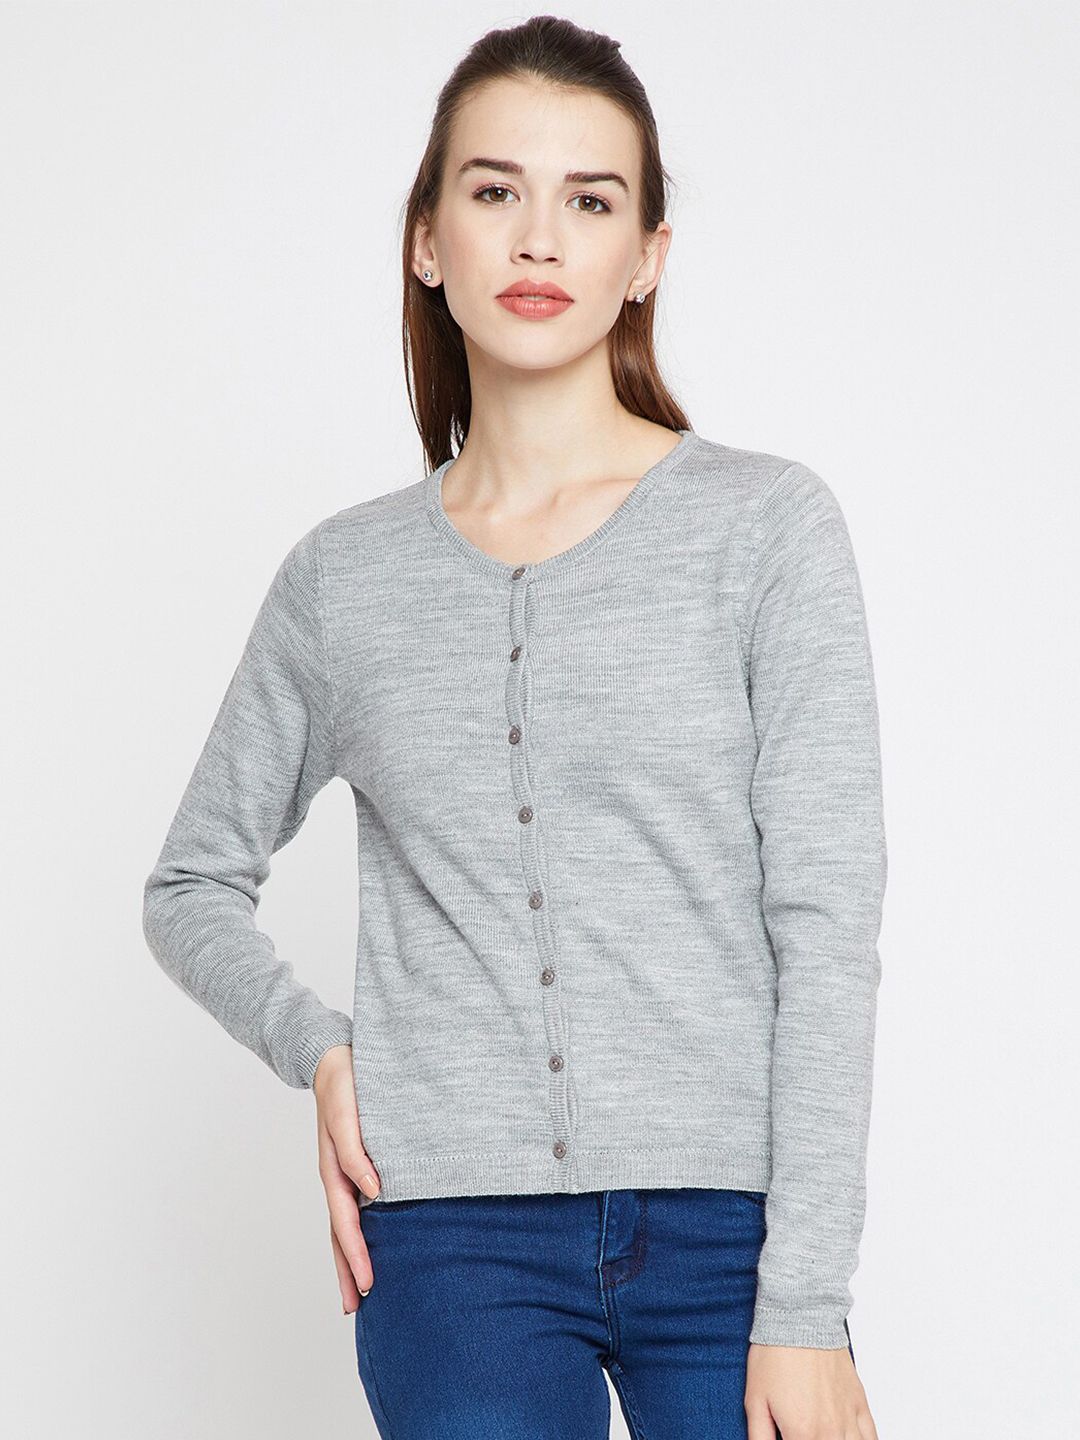 Madame Women Grey Woollen Cardigan Sweater Price in India